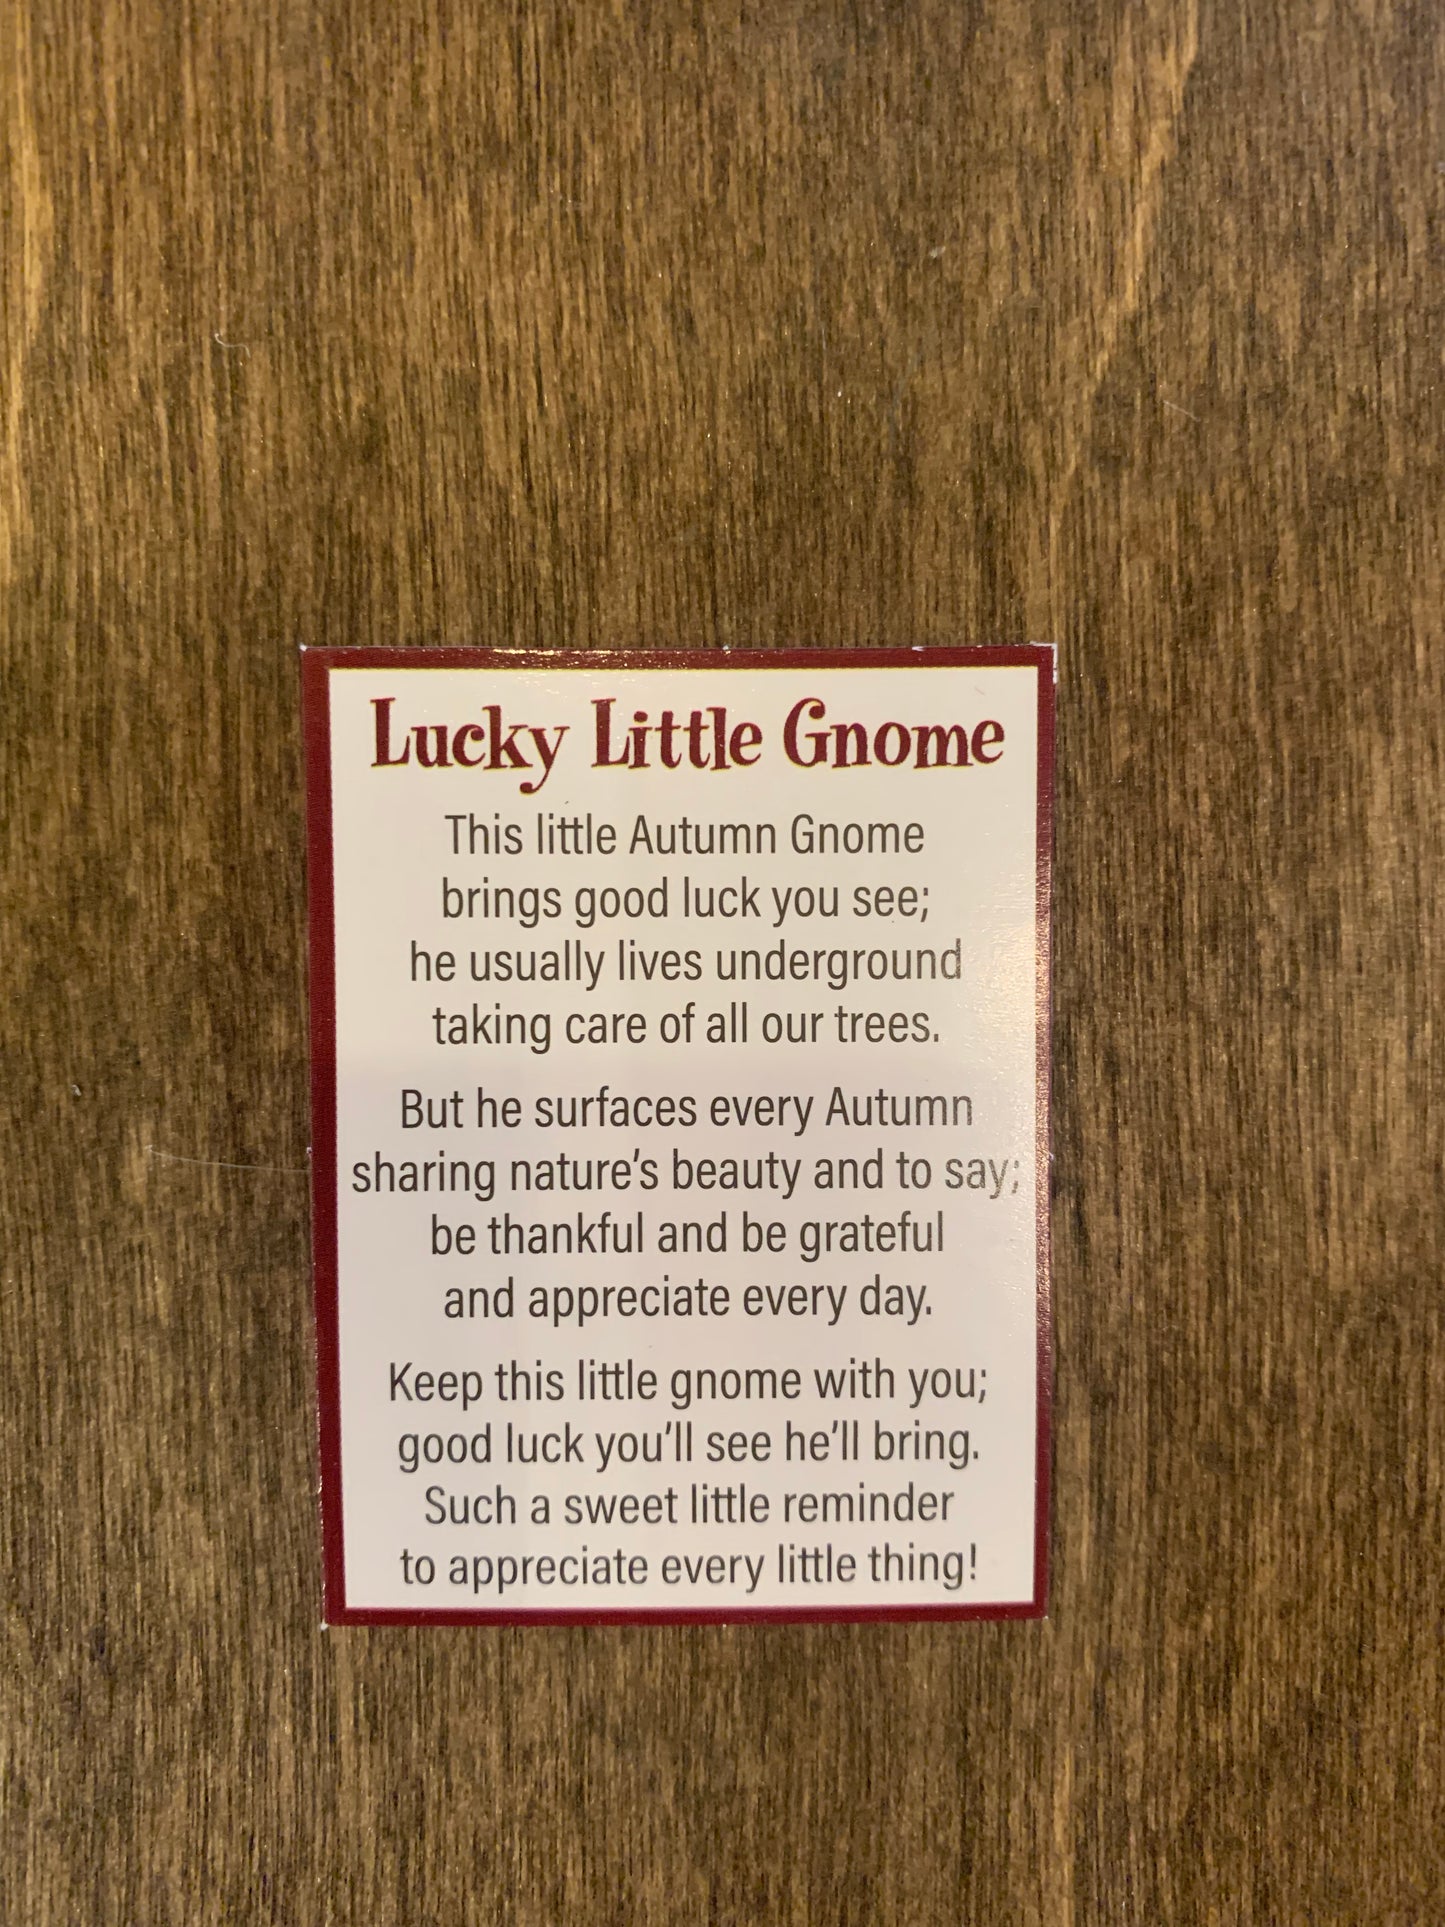 .Lucky Little Autumn Gnome